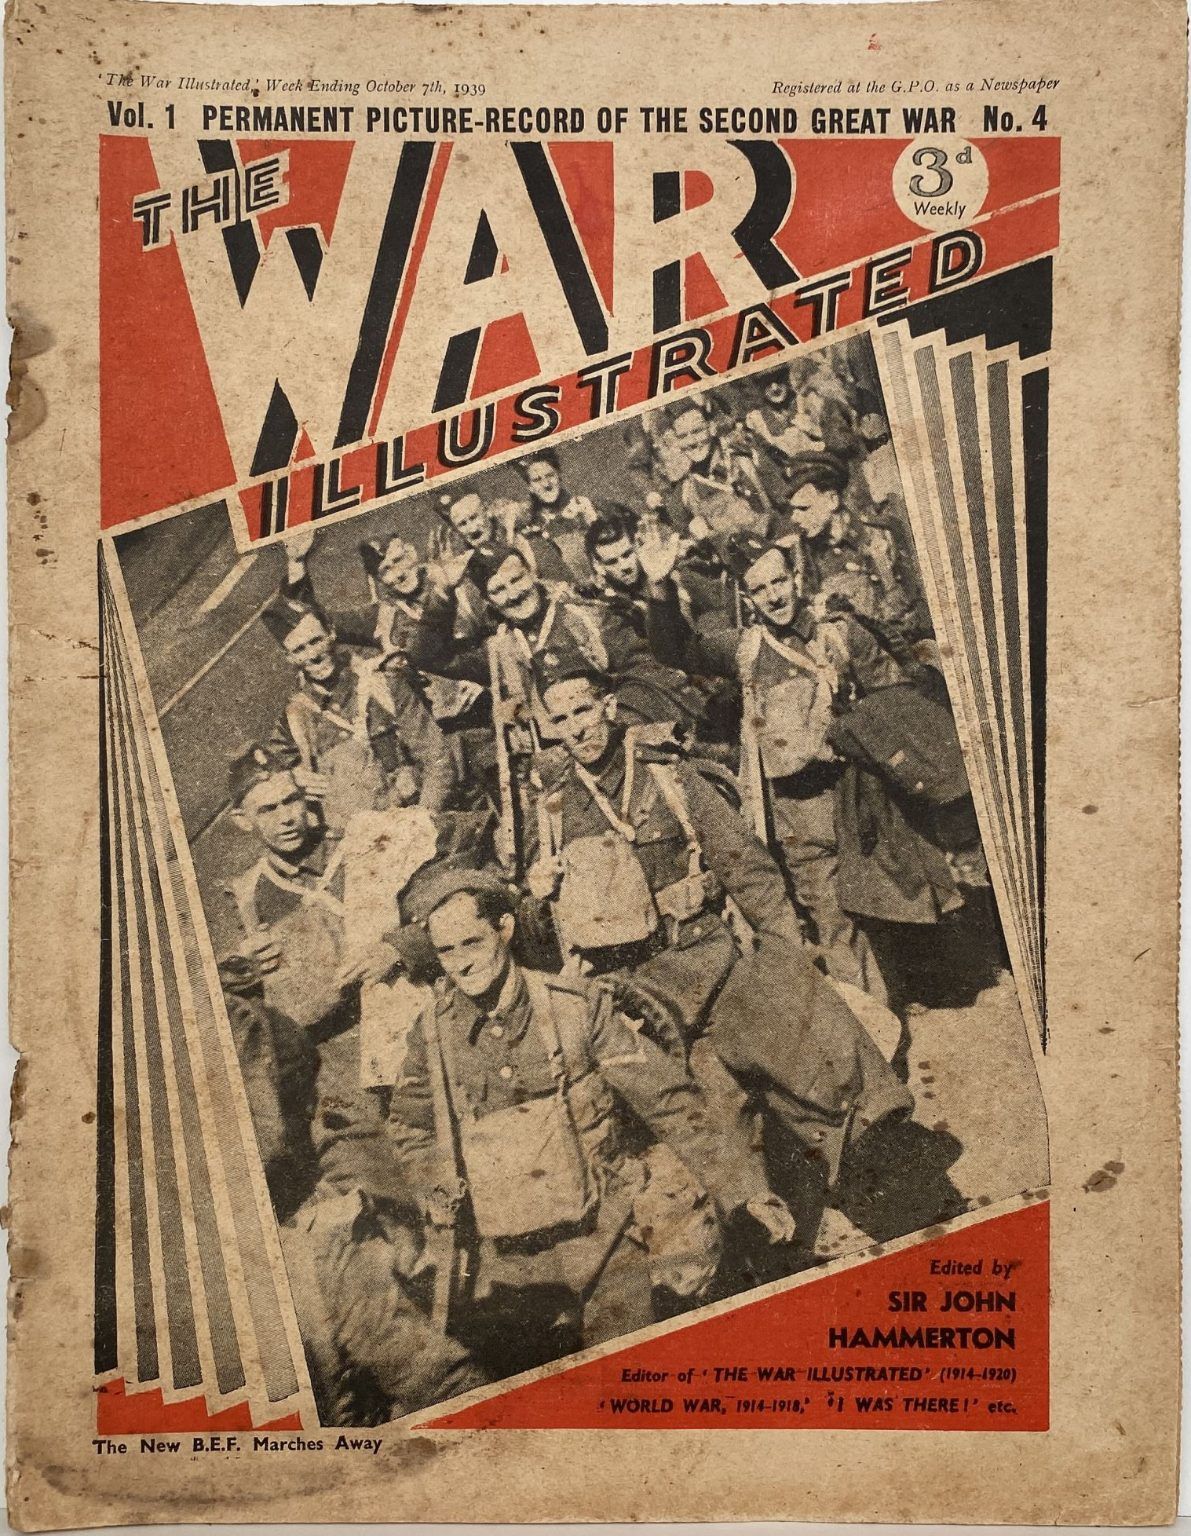 THE WAR ILLUSTRATED - Vol 1, No 4, 7th October 1939